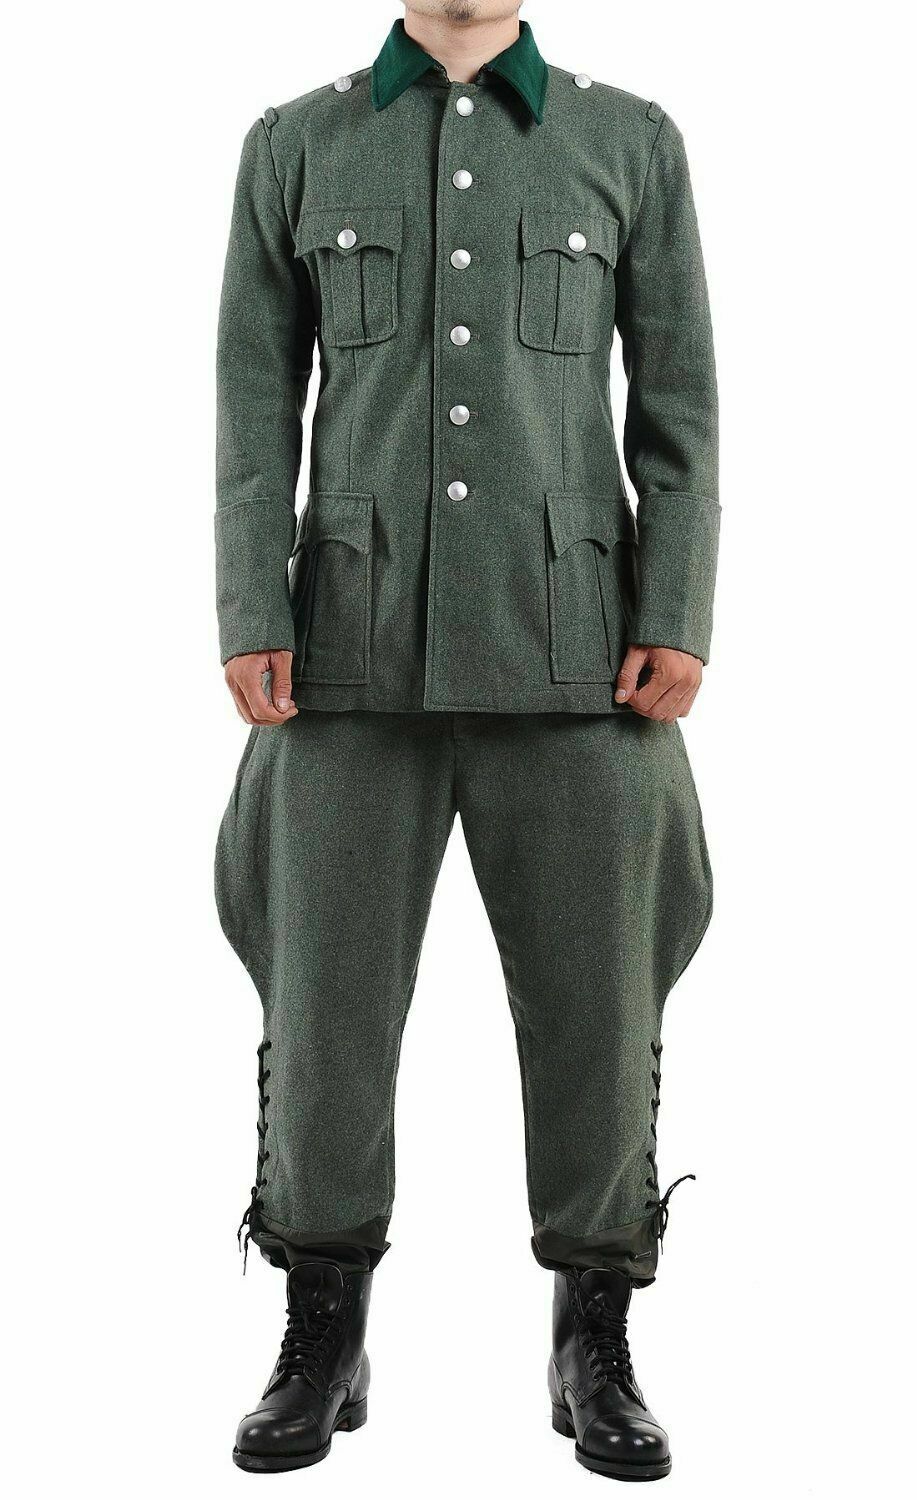 WW2 WWII German Army M36 Officer Wool Field Tunic & Breeches Military Uniform War Reenactments